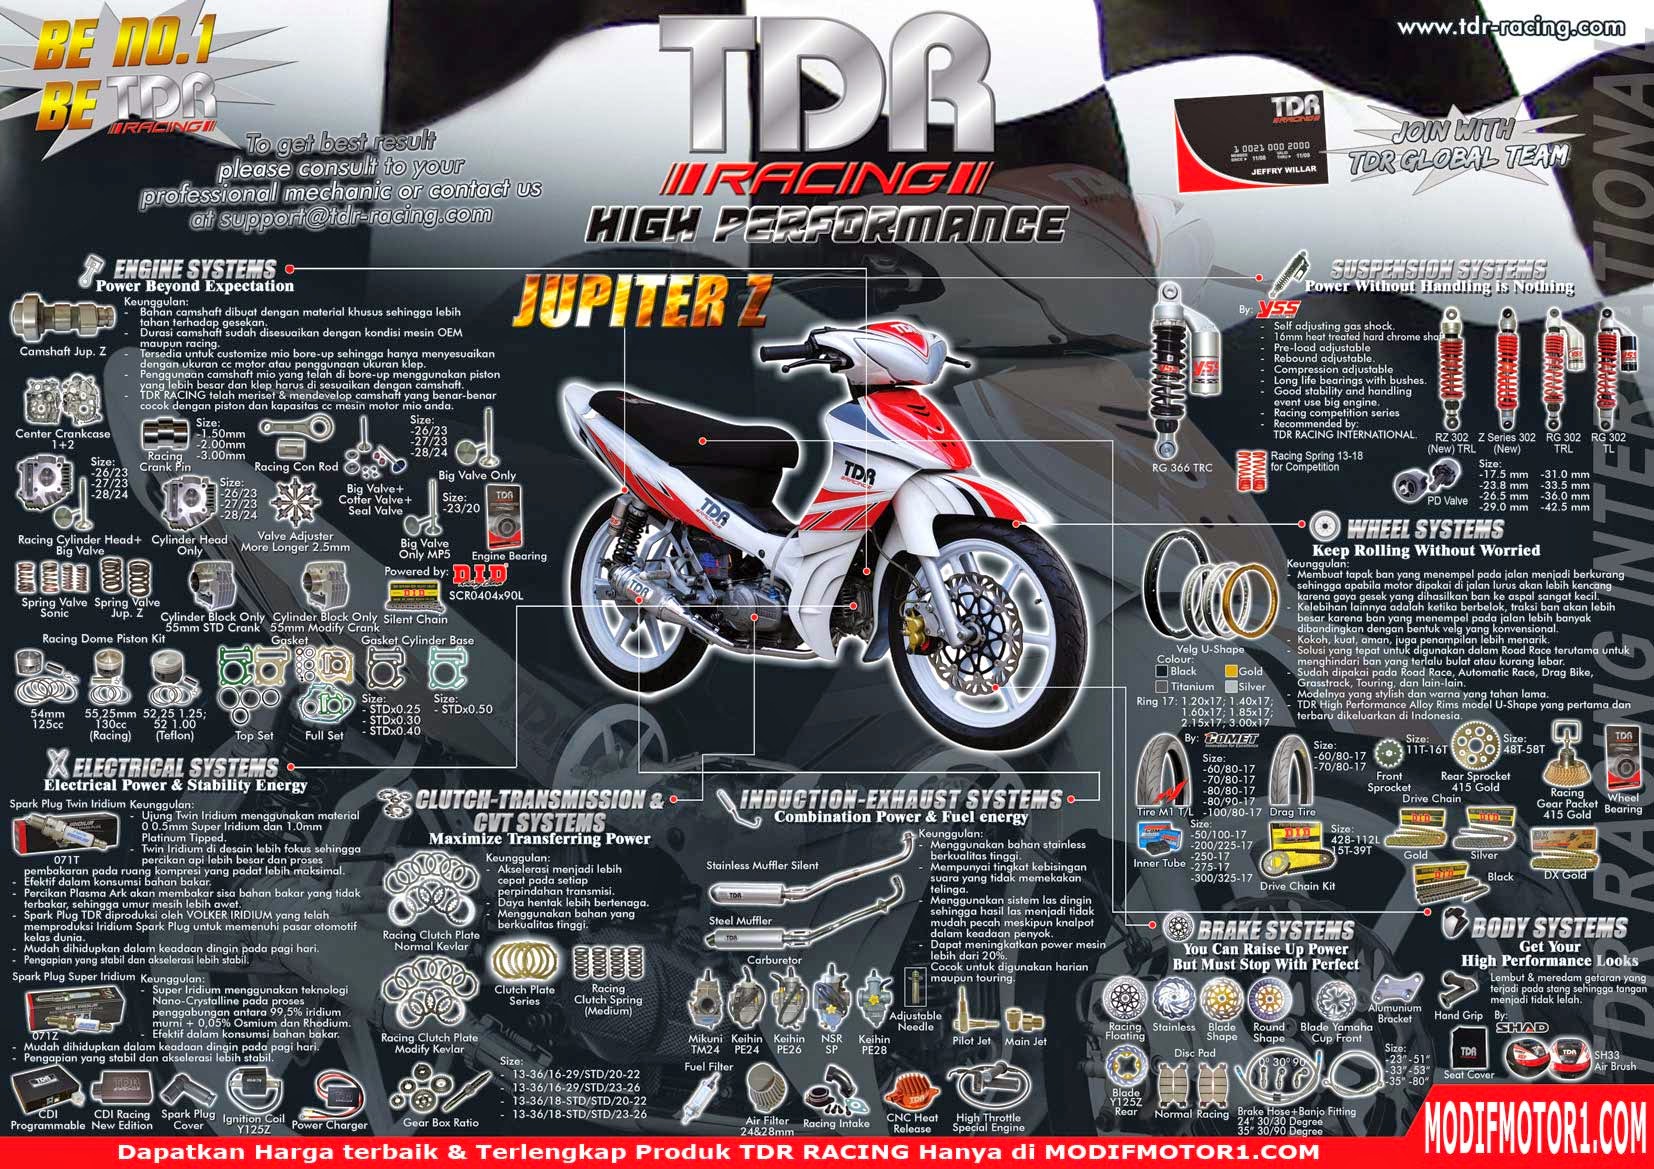 Download Modifikasi Body Motor Jupiter Z 2008 Terlengkap Fire Modif